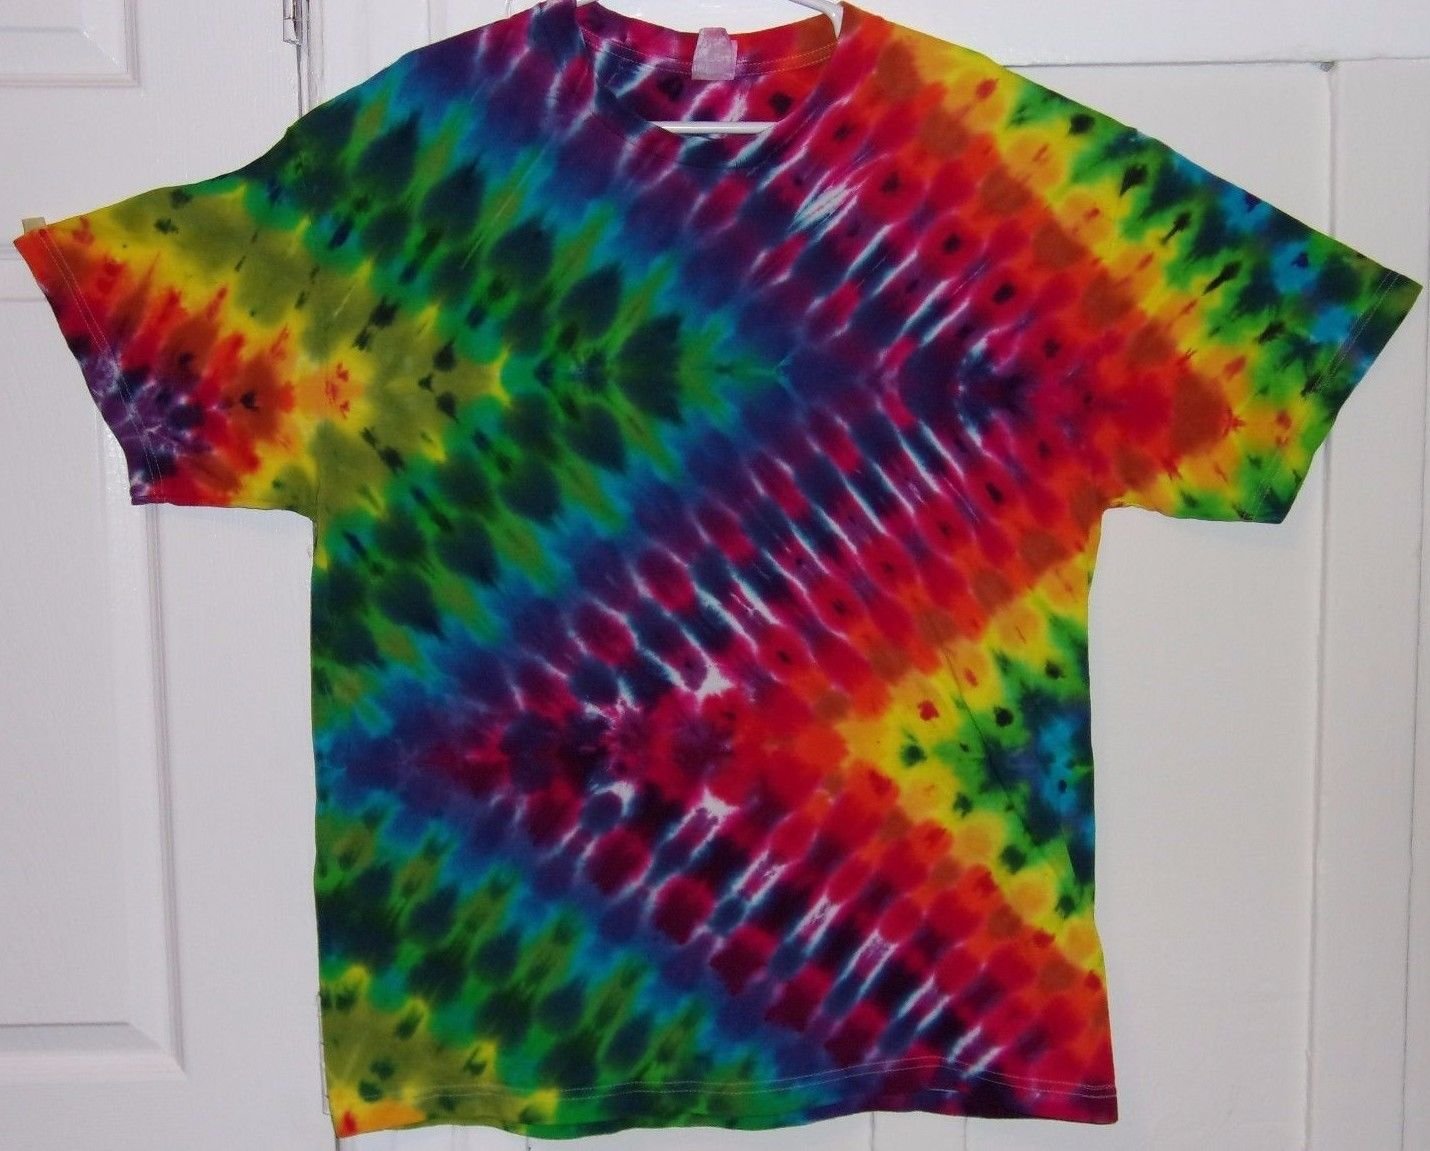 New Tie Dye XL AAA Alstyle Tshirt Rainbow colors Zig Zag pattern t shirt